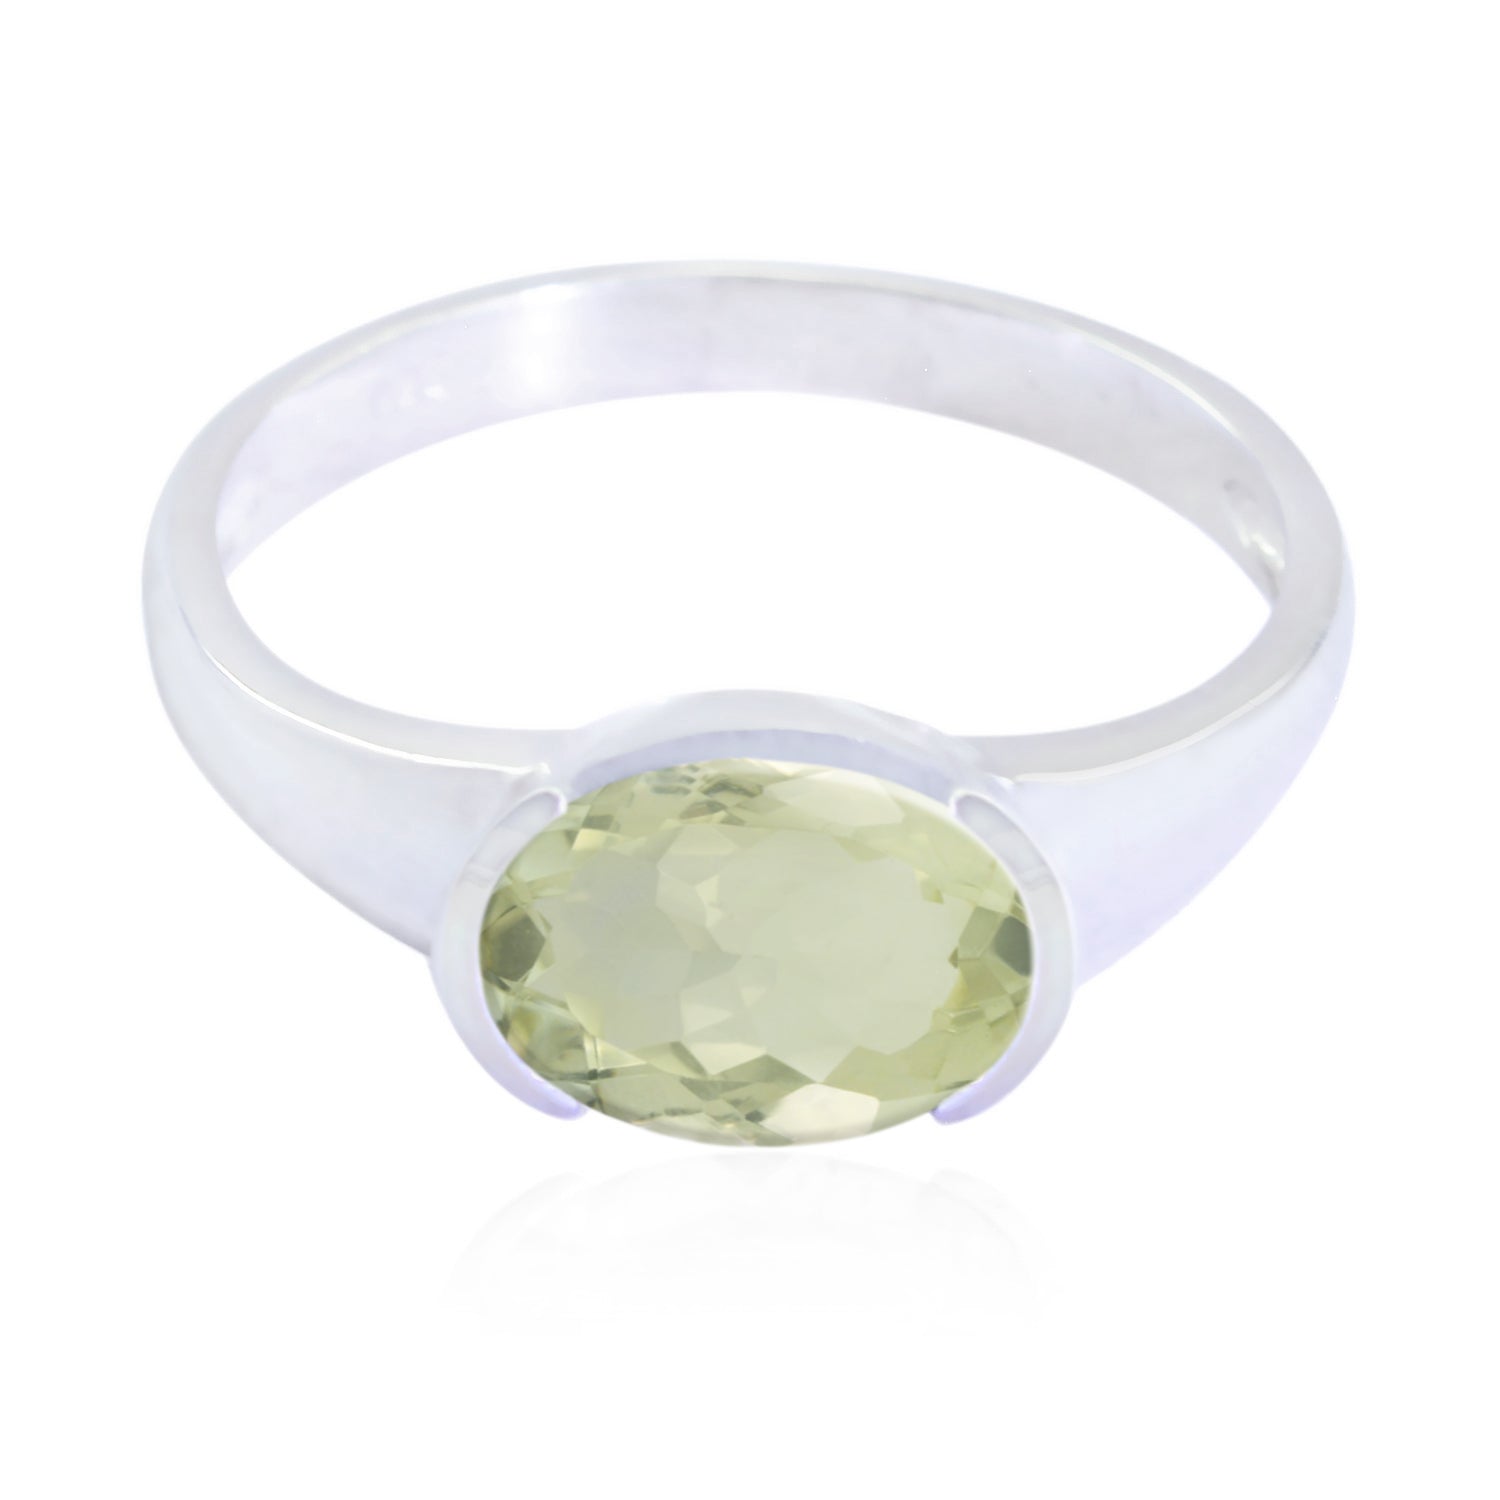 Flawless Gem Green Amethyst 925 Silver Ring Handmade Beaded Jewelry